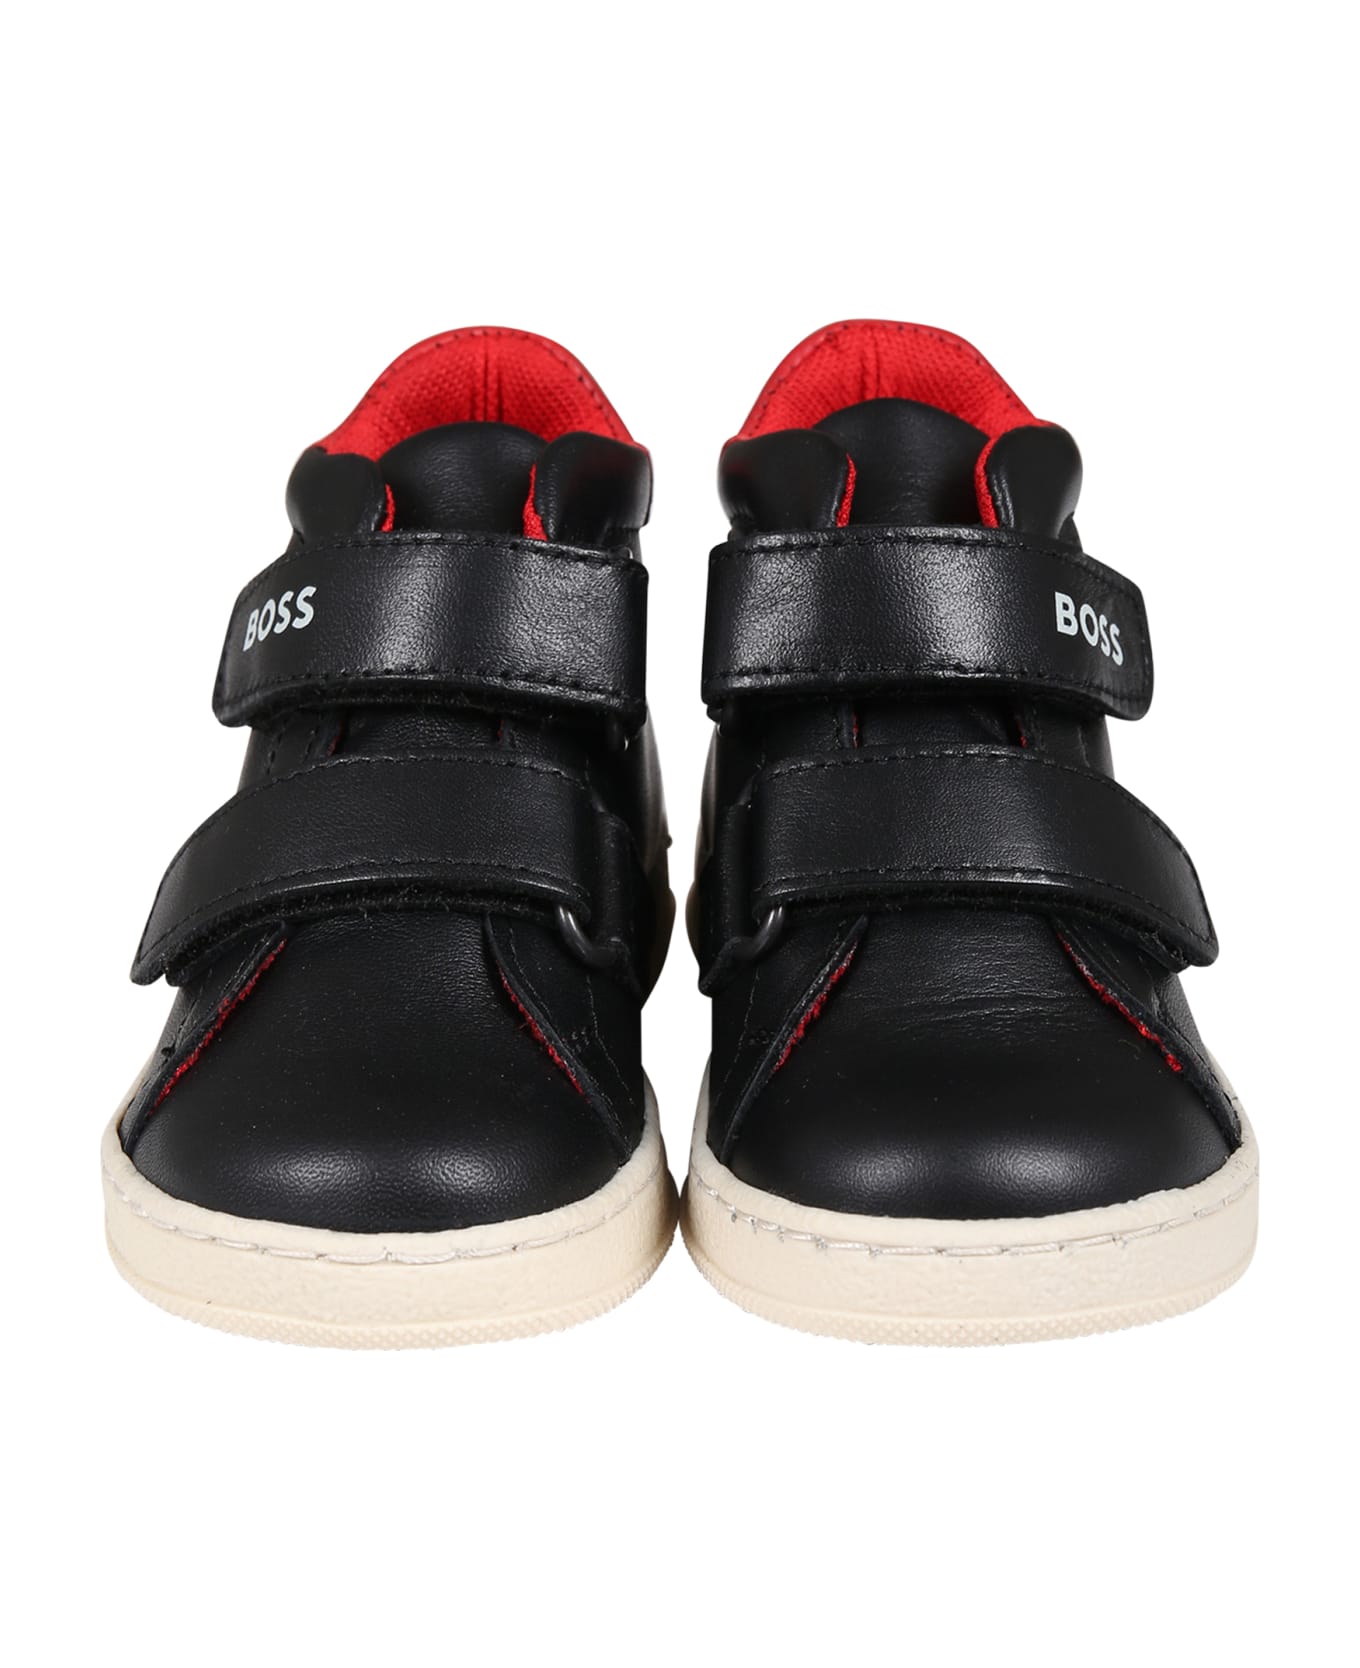 Hugo Boss Black Sneakers For Boy With Logo - Black